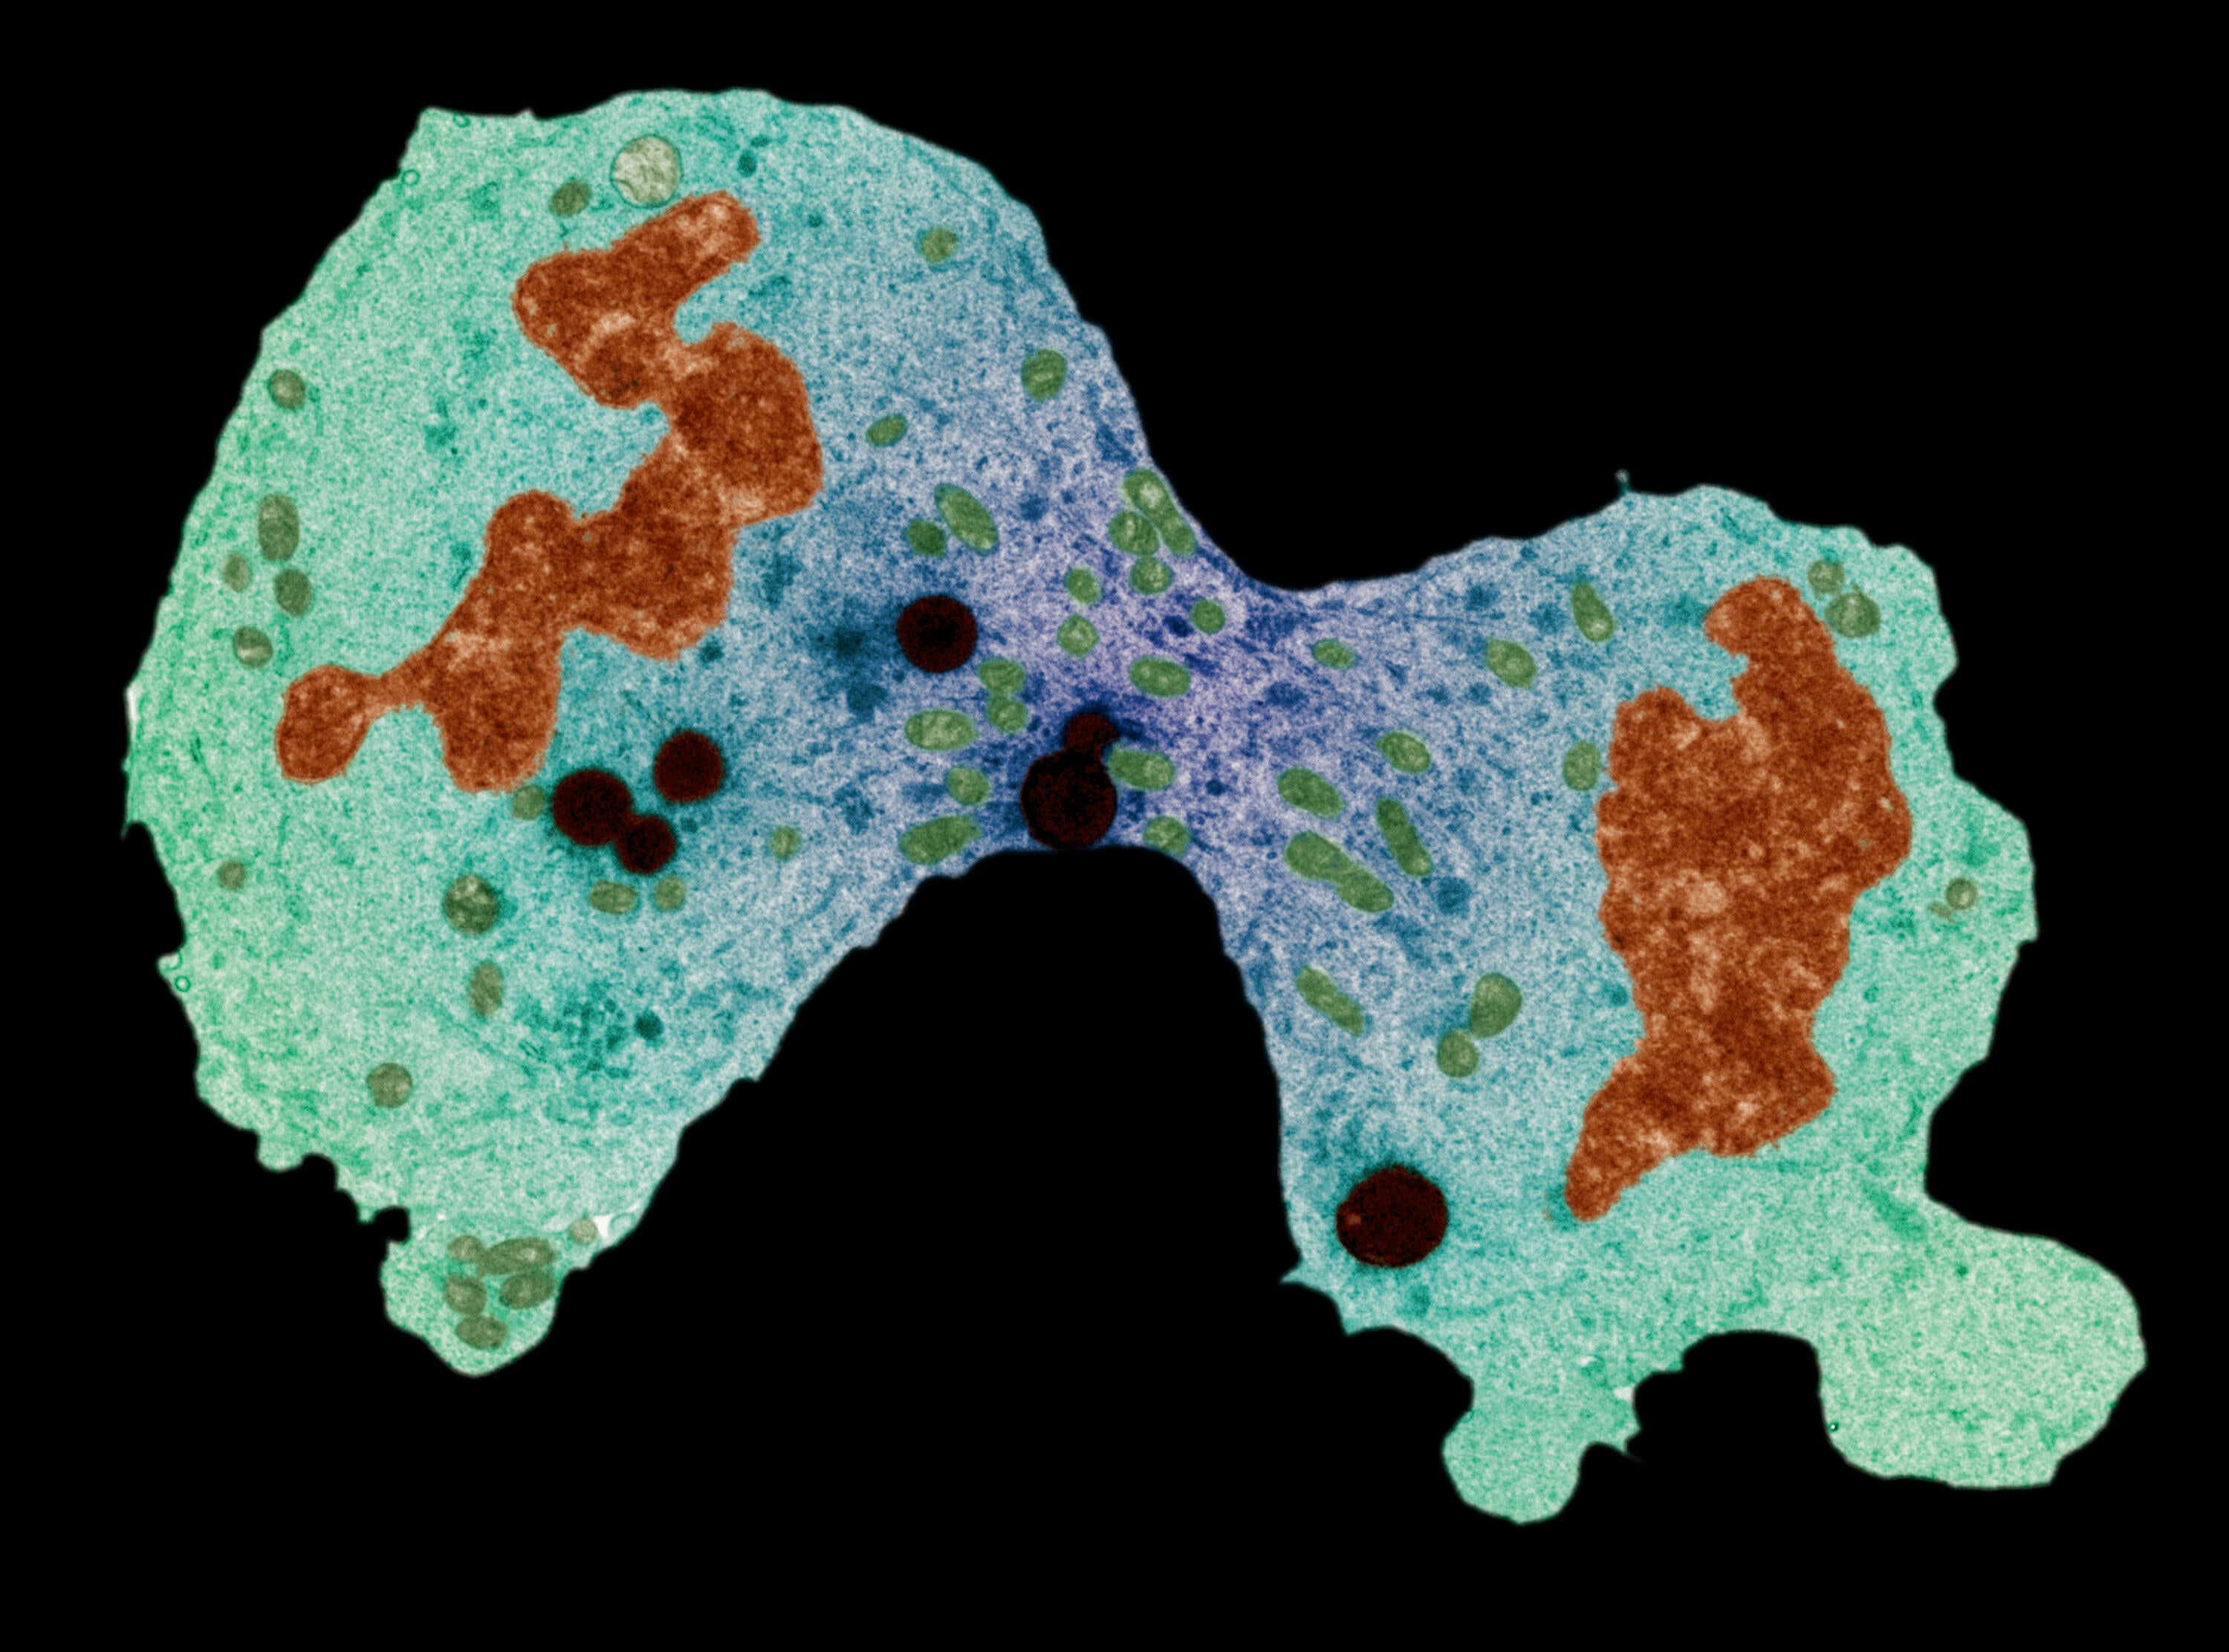 Microscopic cancer cells dividing.